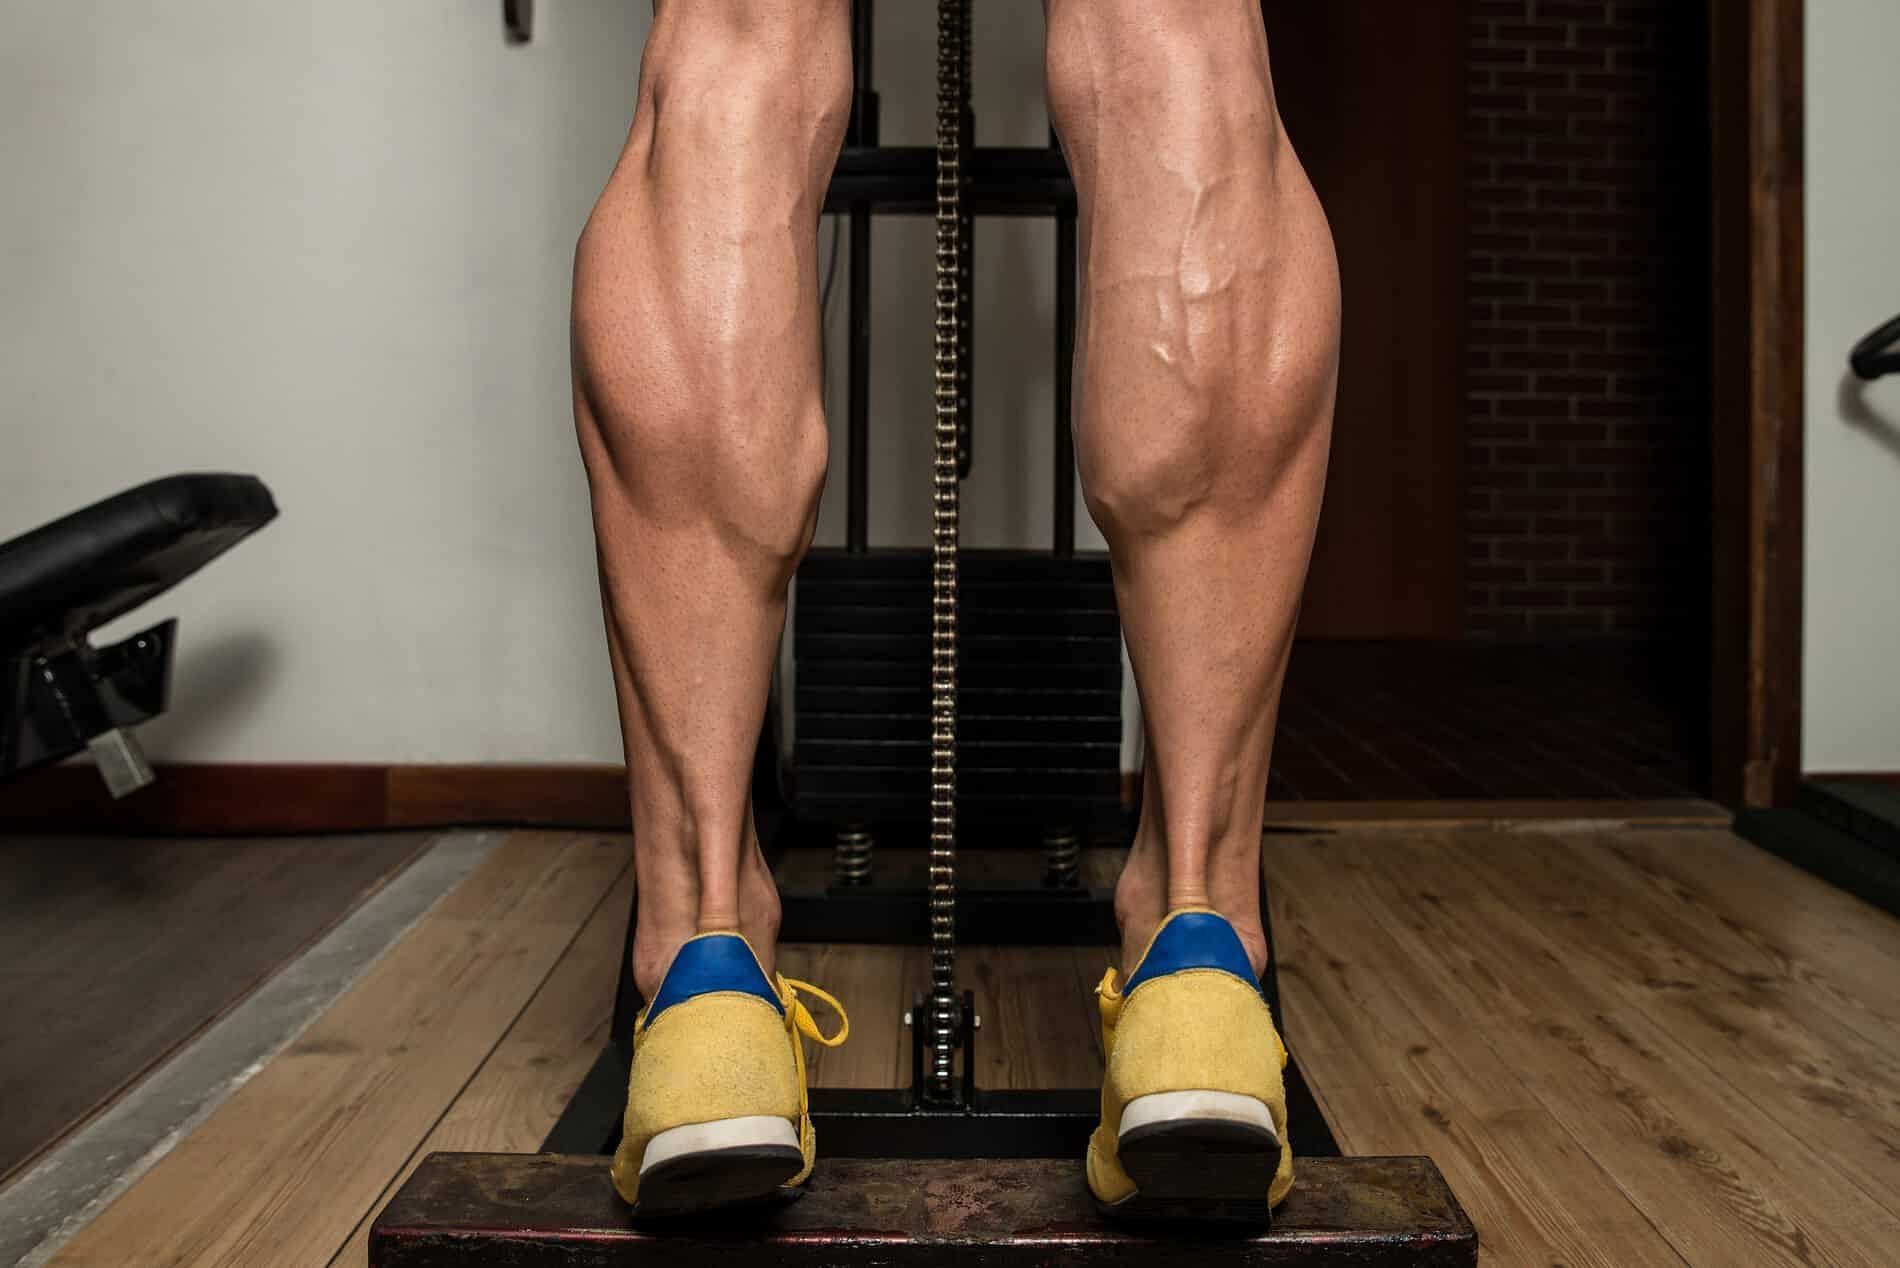 Calf raises to support lower leg muscles. (Image via Pinterest/ Bodybuildingmealplan.com)